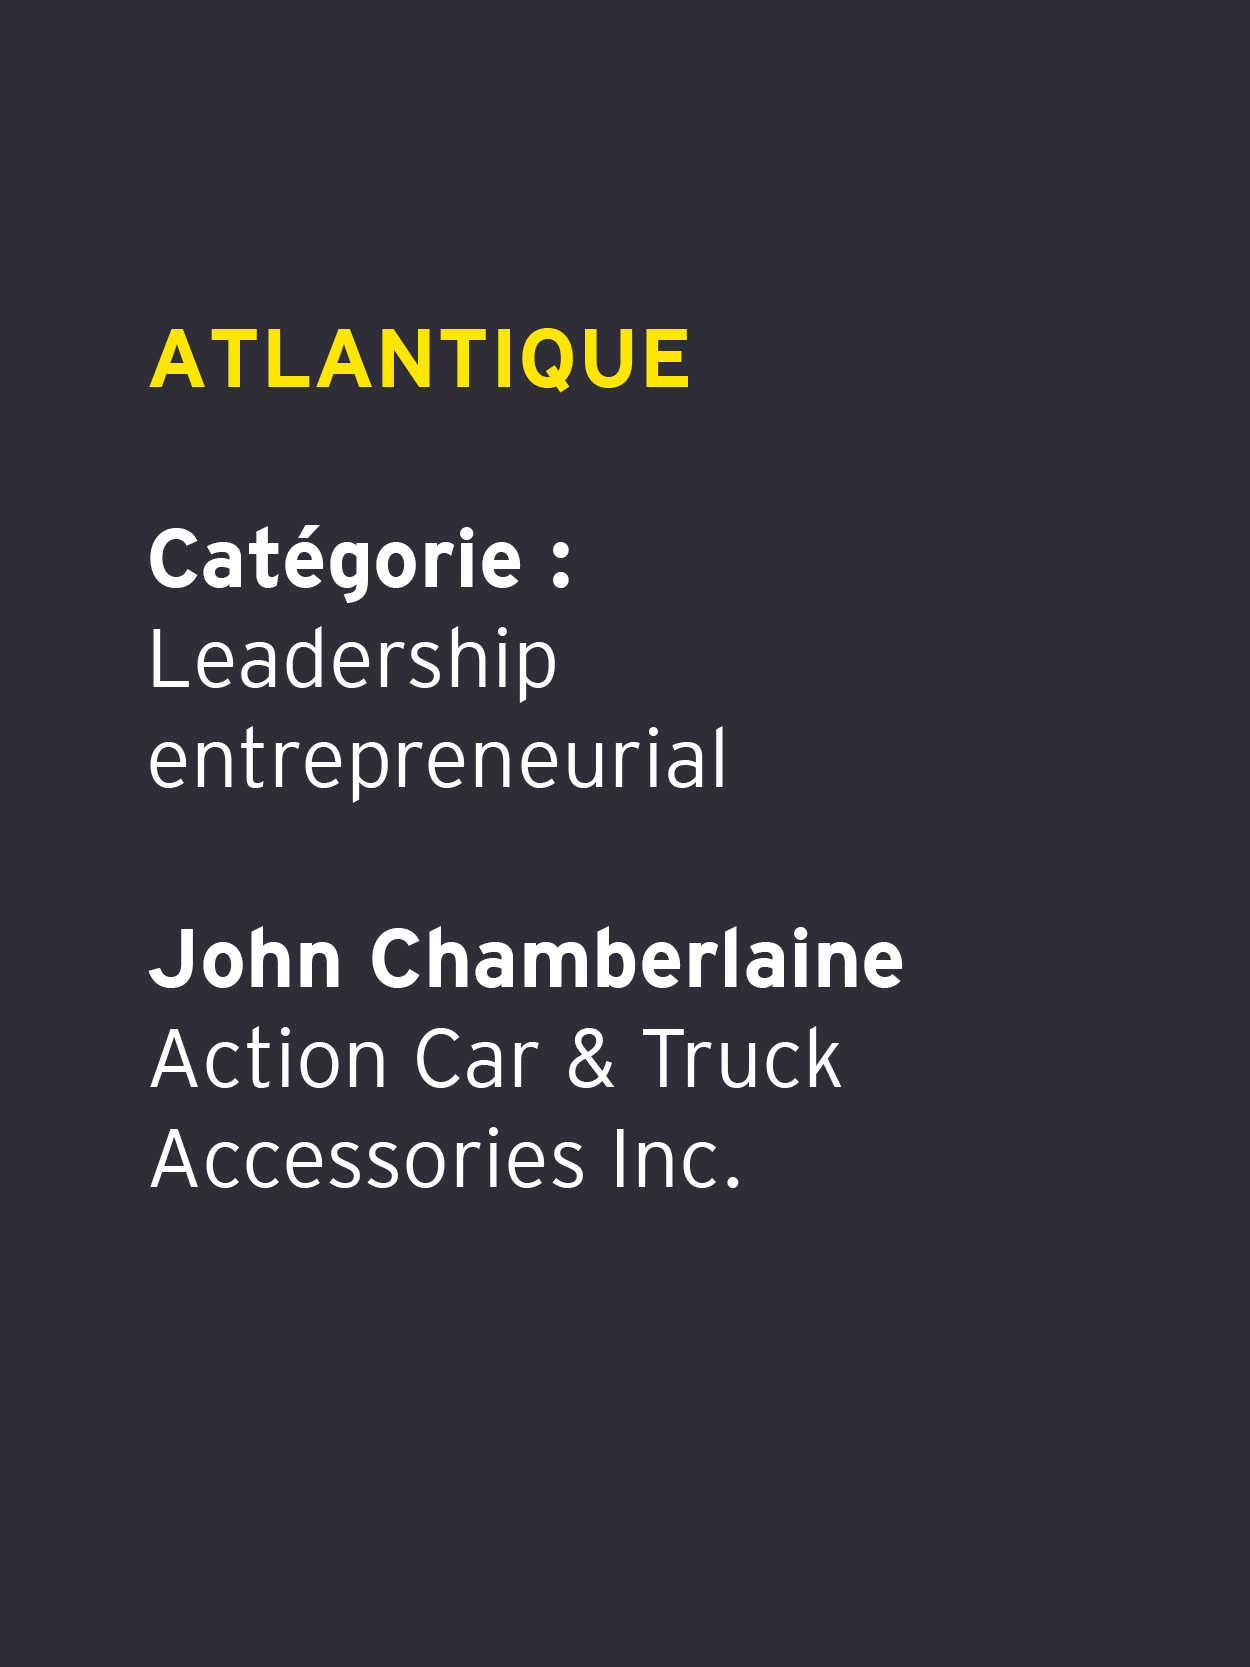             John Chamberlaine — Action Car & Truck Accessories Inc.         